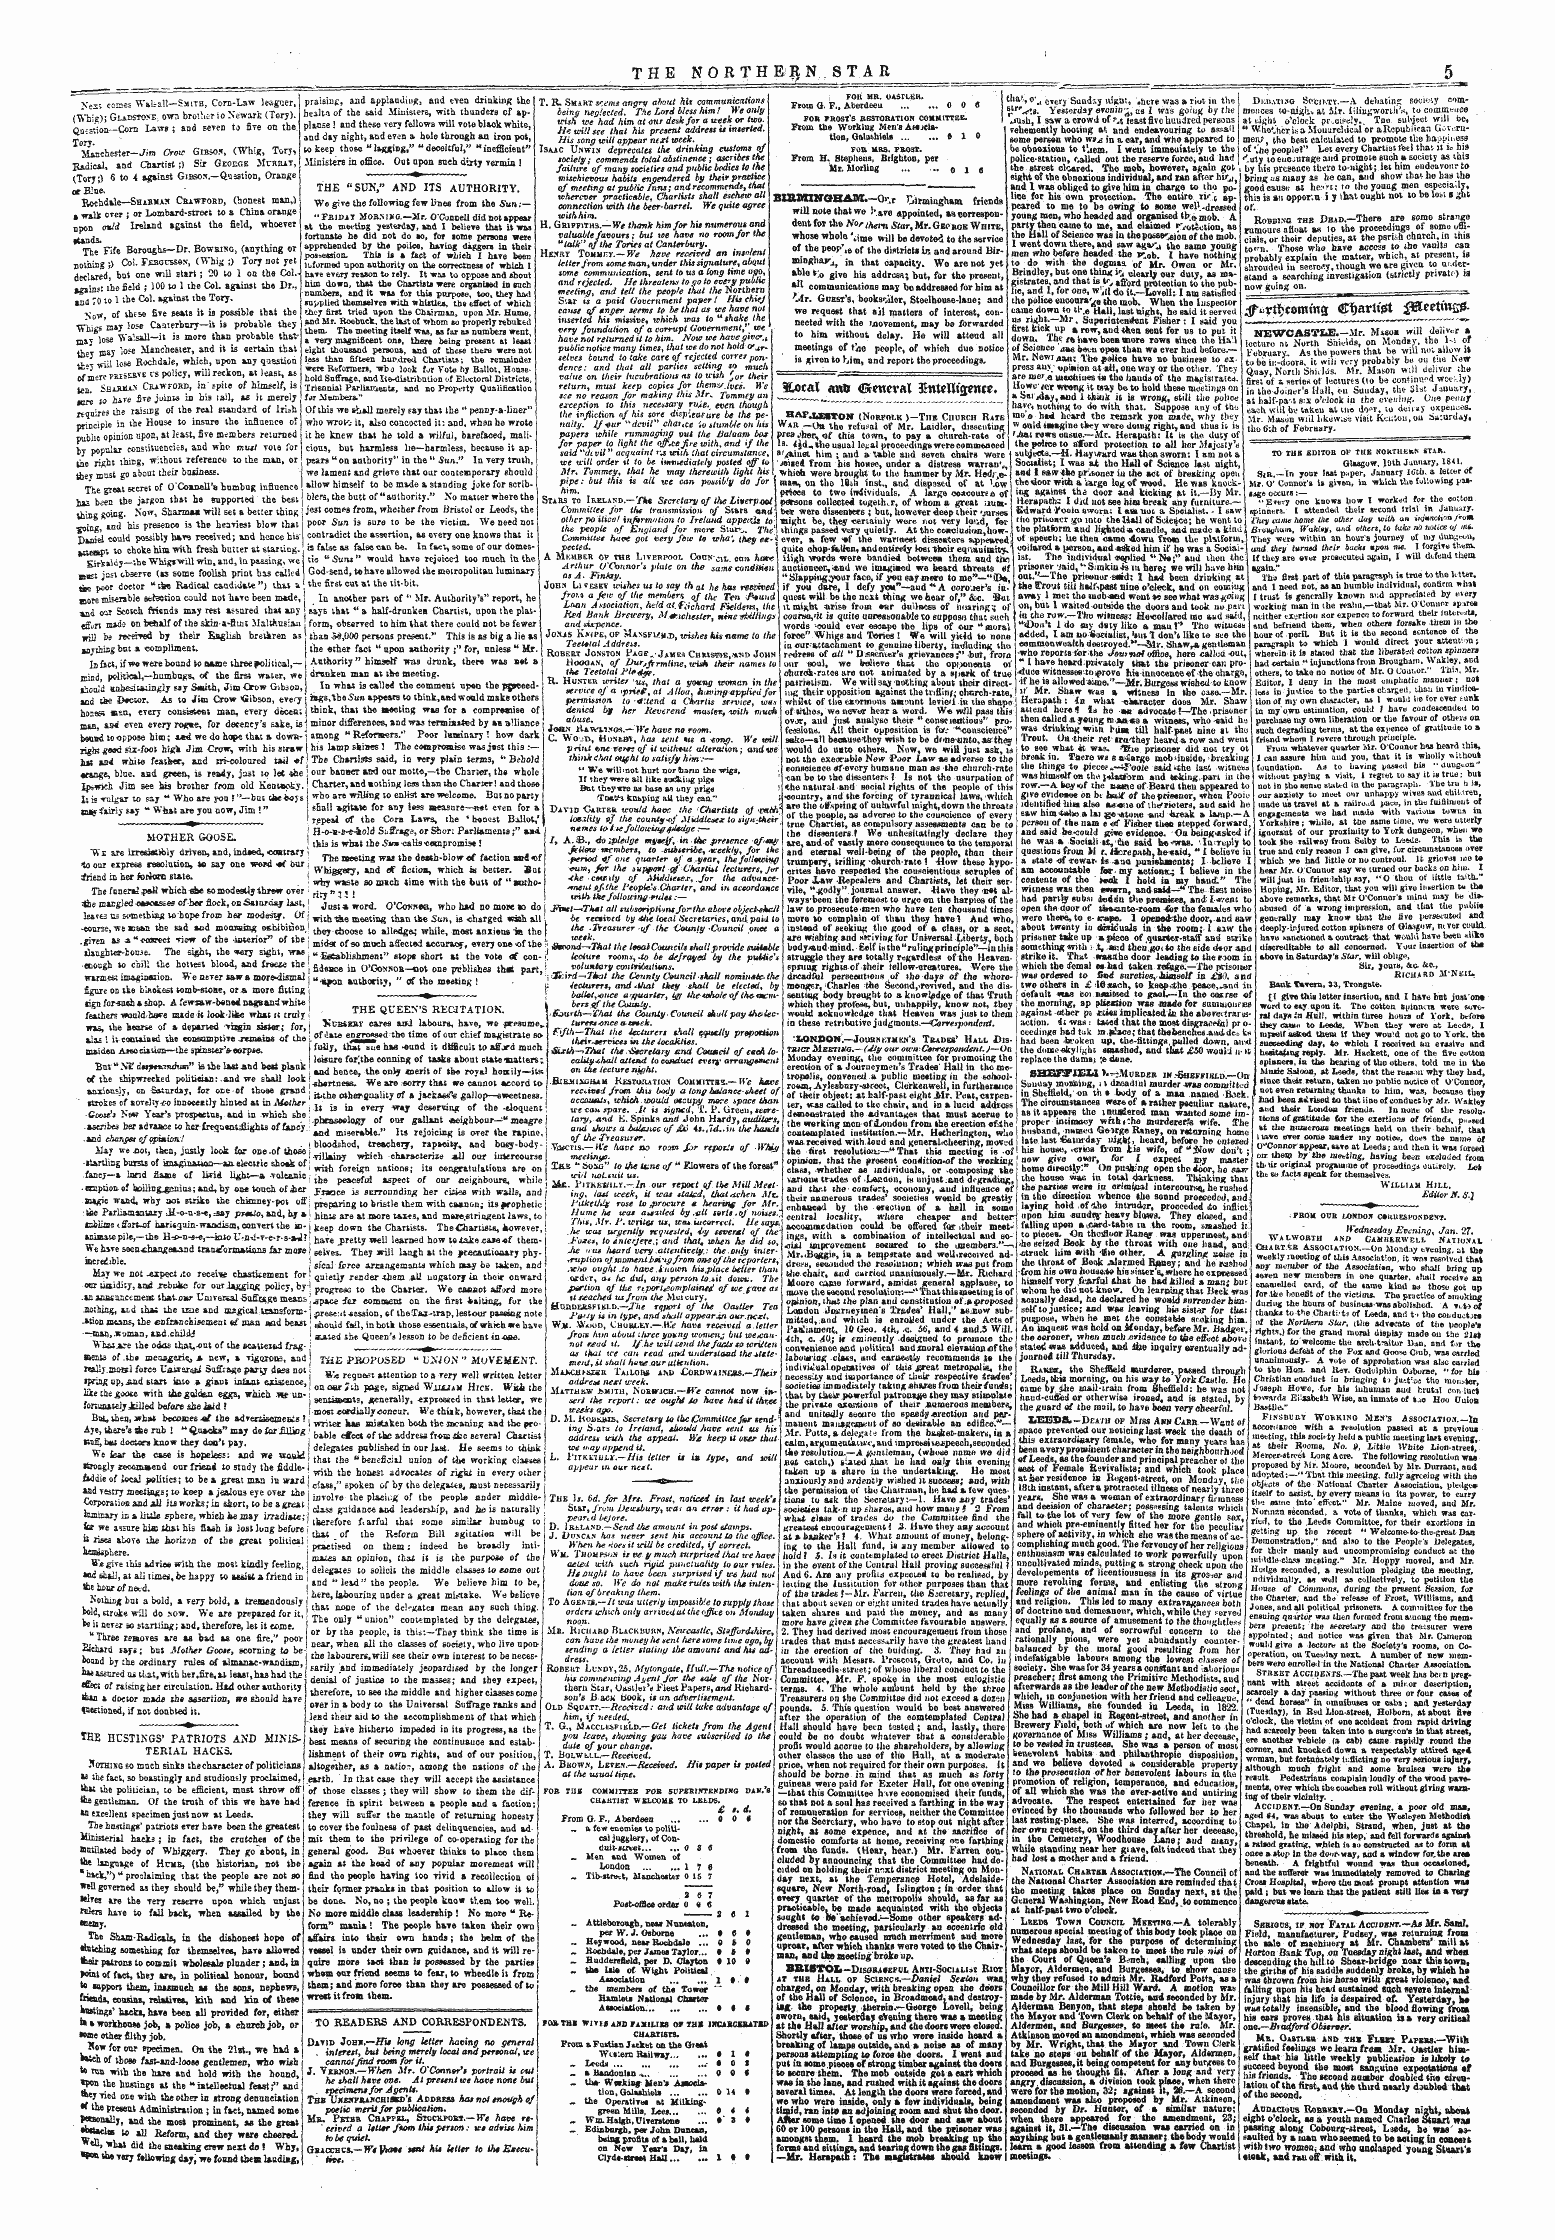 Northern Star (1837-1852): jS F Y, 5th edition - To Thb Bditob Ok Tub Nouthekn Star.